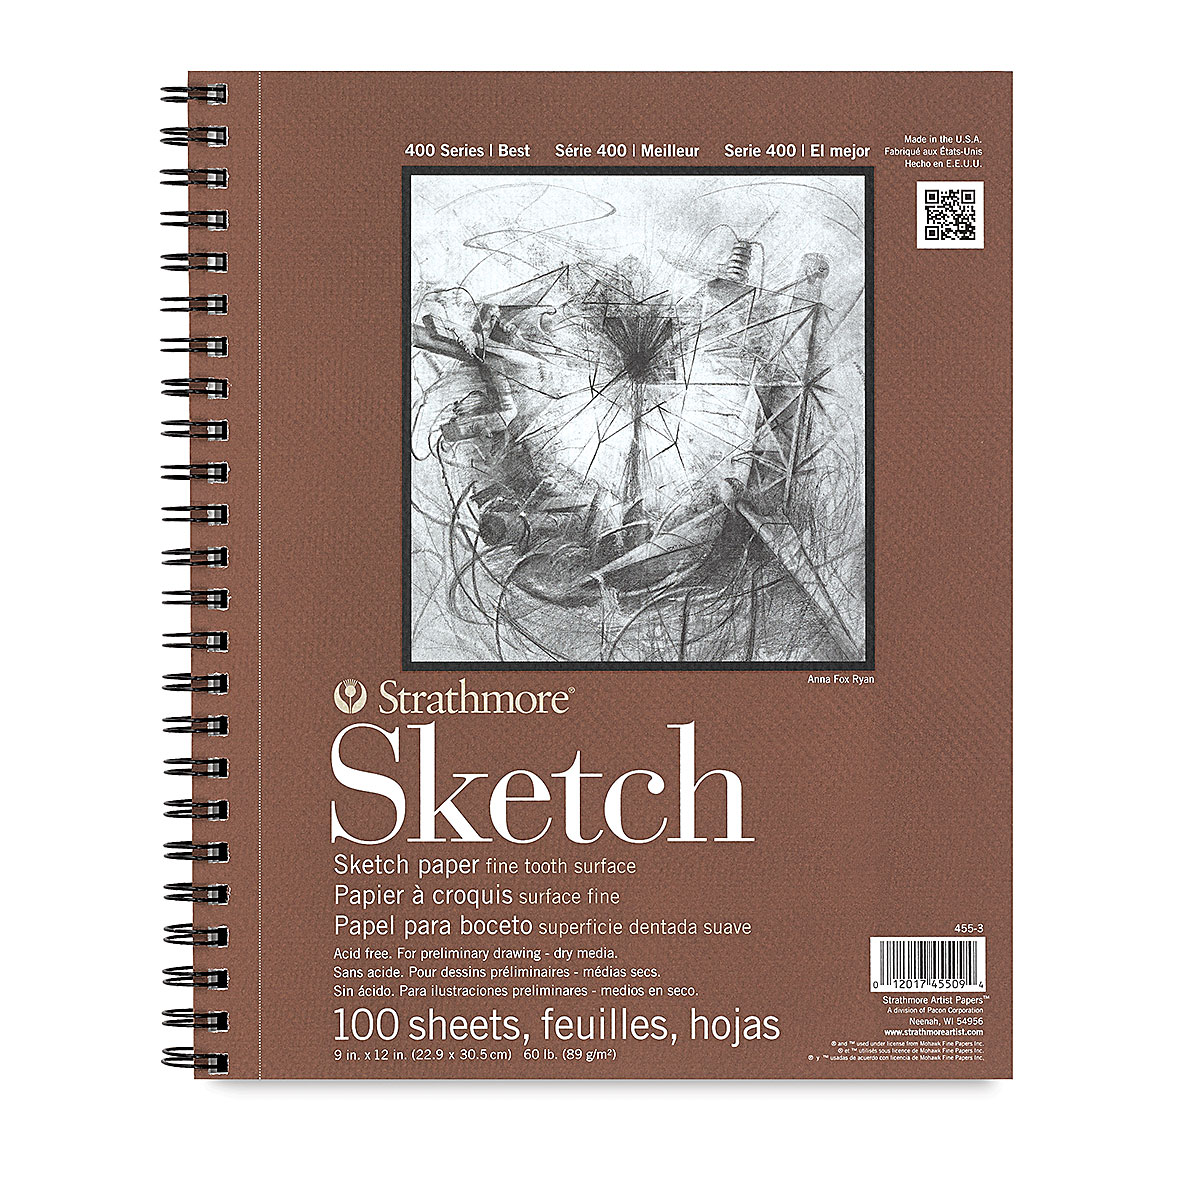 9x12 Spiral Sketch Paper Pad Dots 100 Sheets - Strathmore : Target